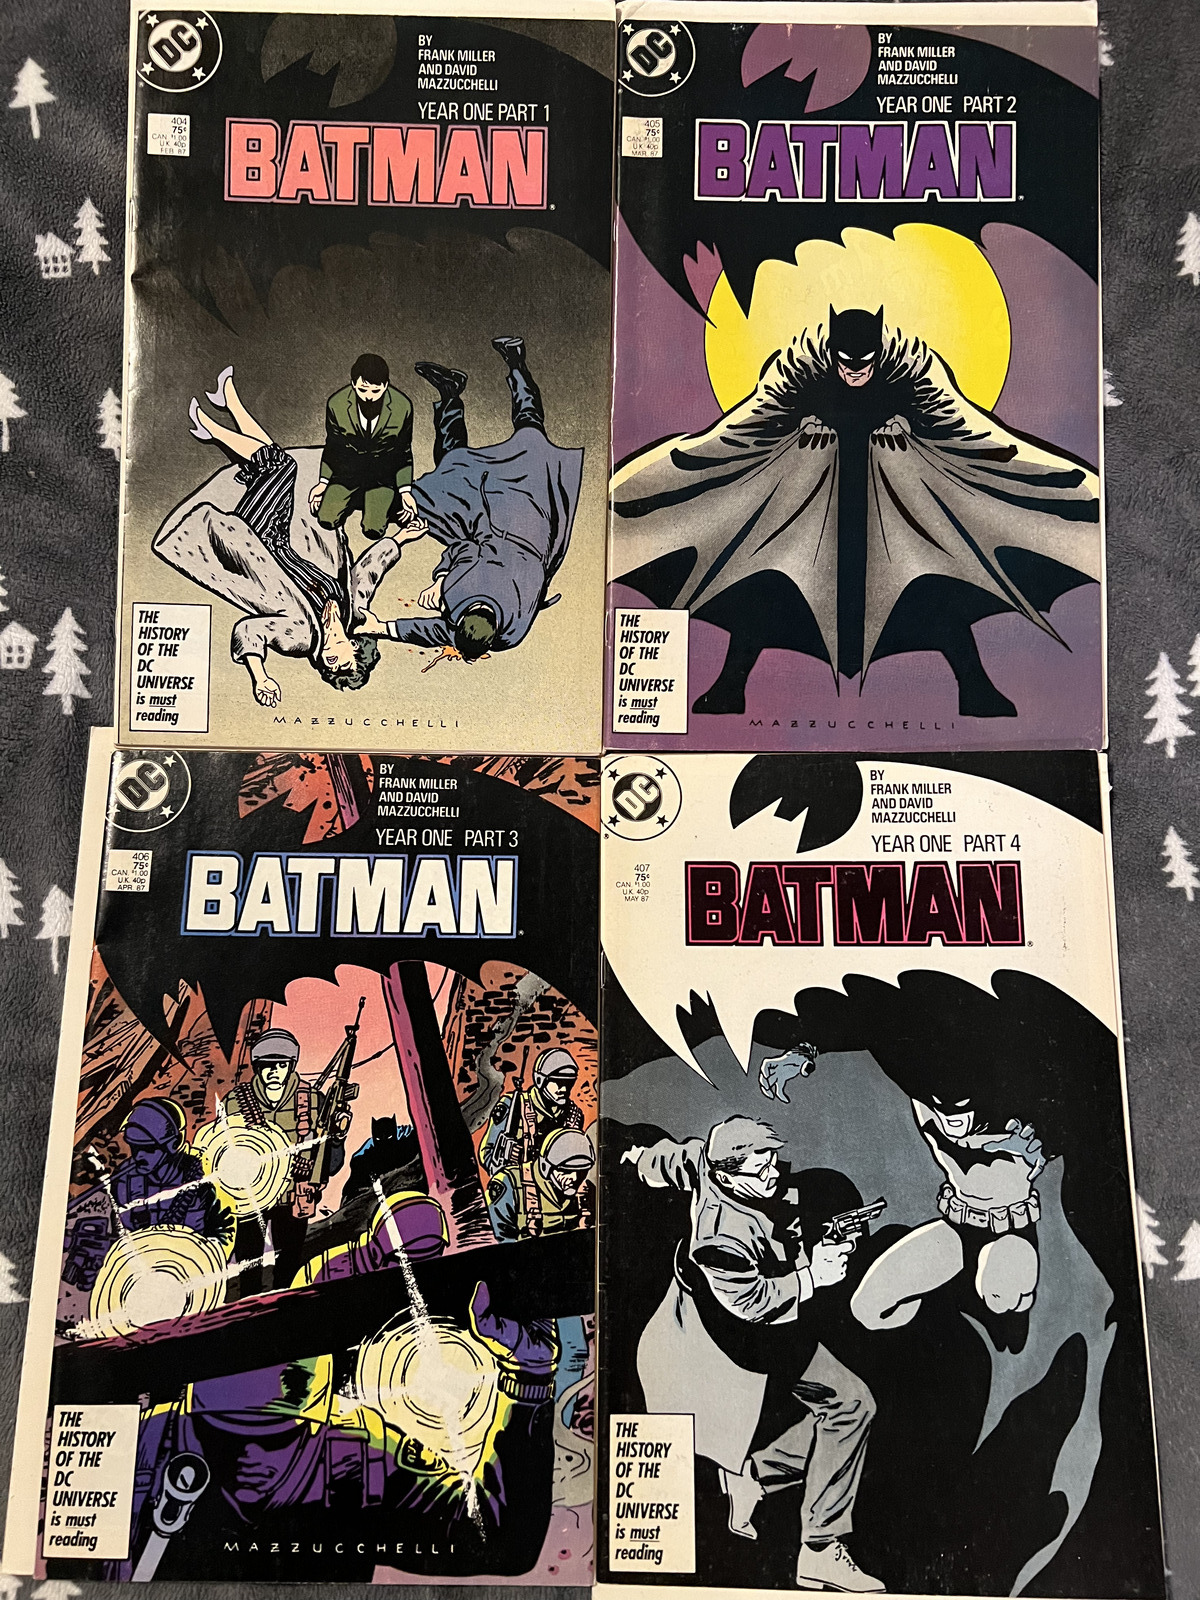 DC COMICS BATMAN YEAR ONE PART 1-4, ISSUES 404, 405, 406, 407, 1987 VF+